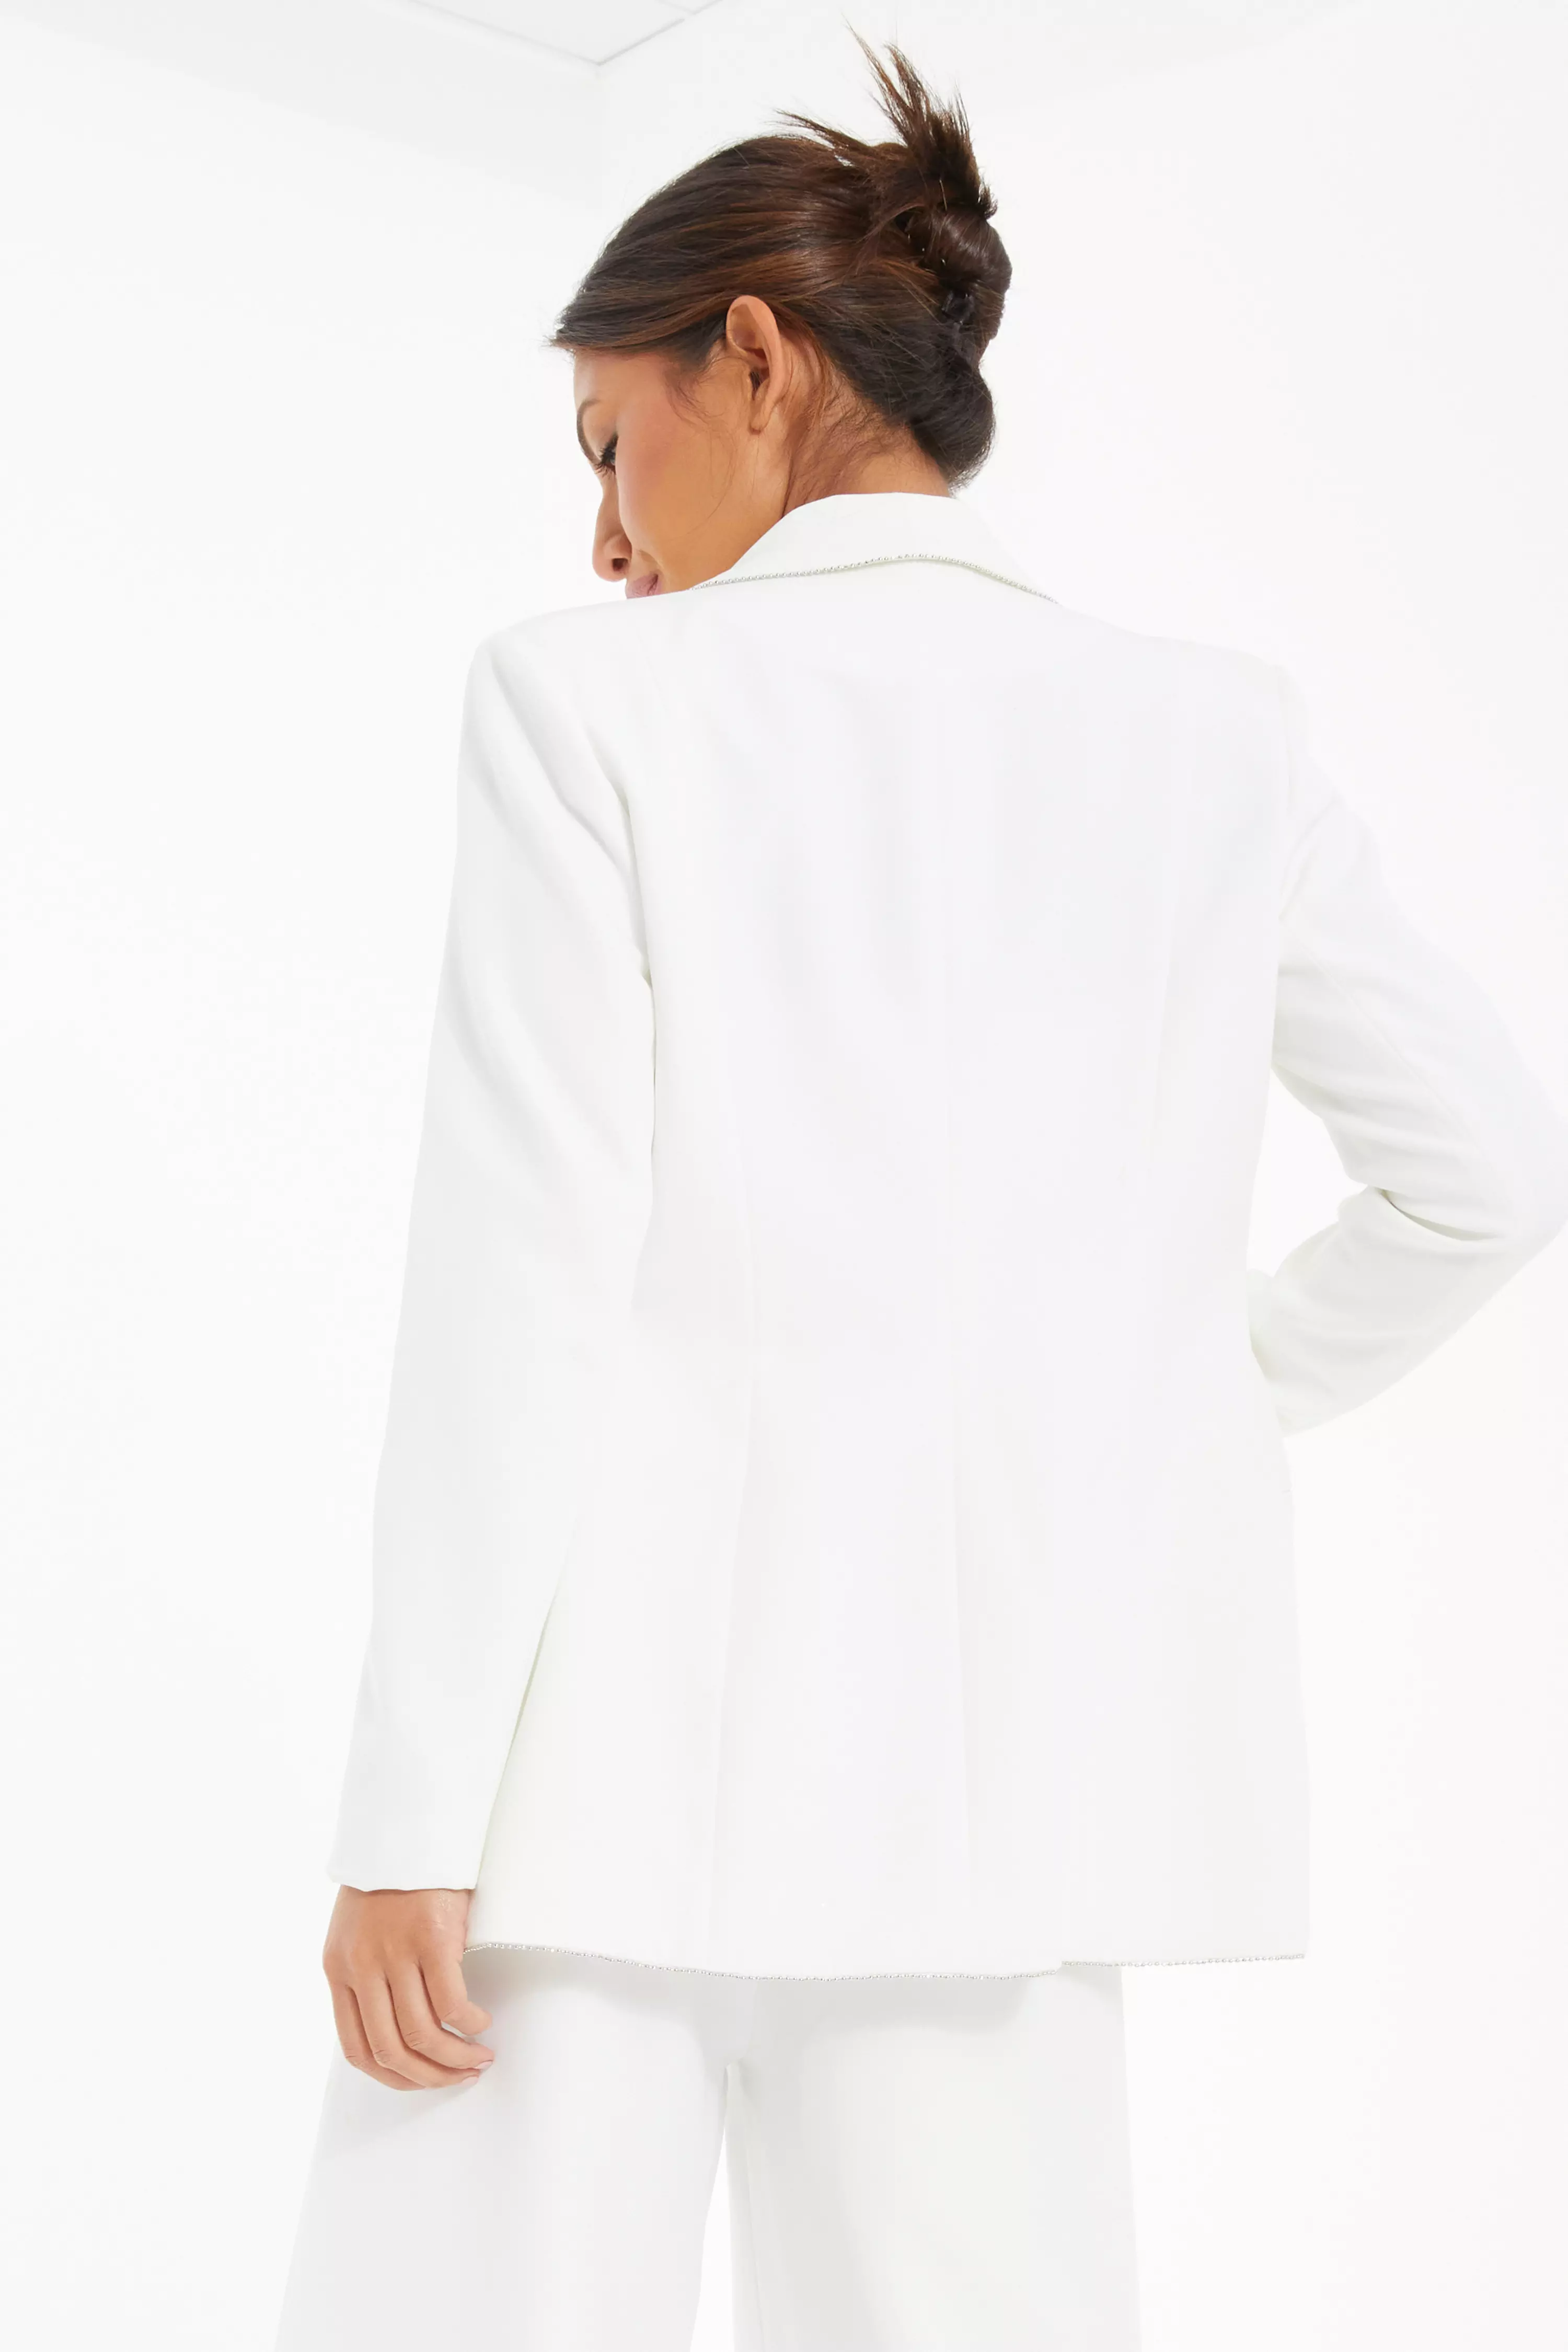 White Embellished Trim Tailored Blazer